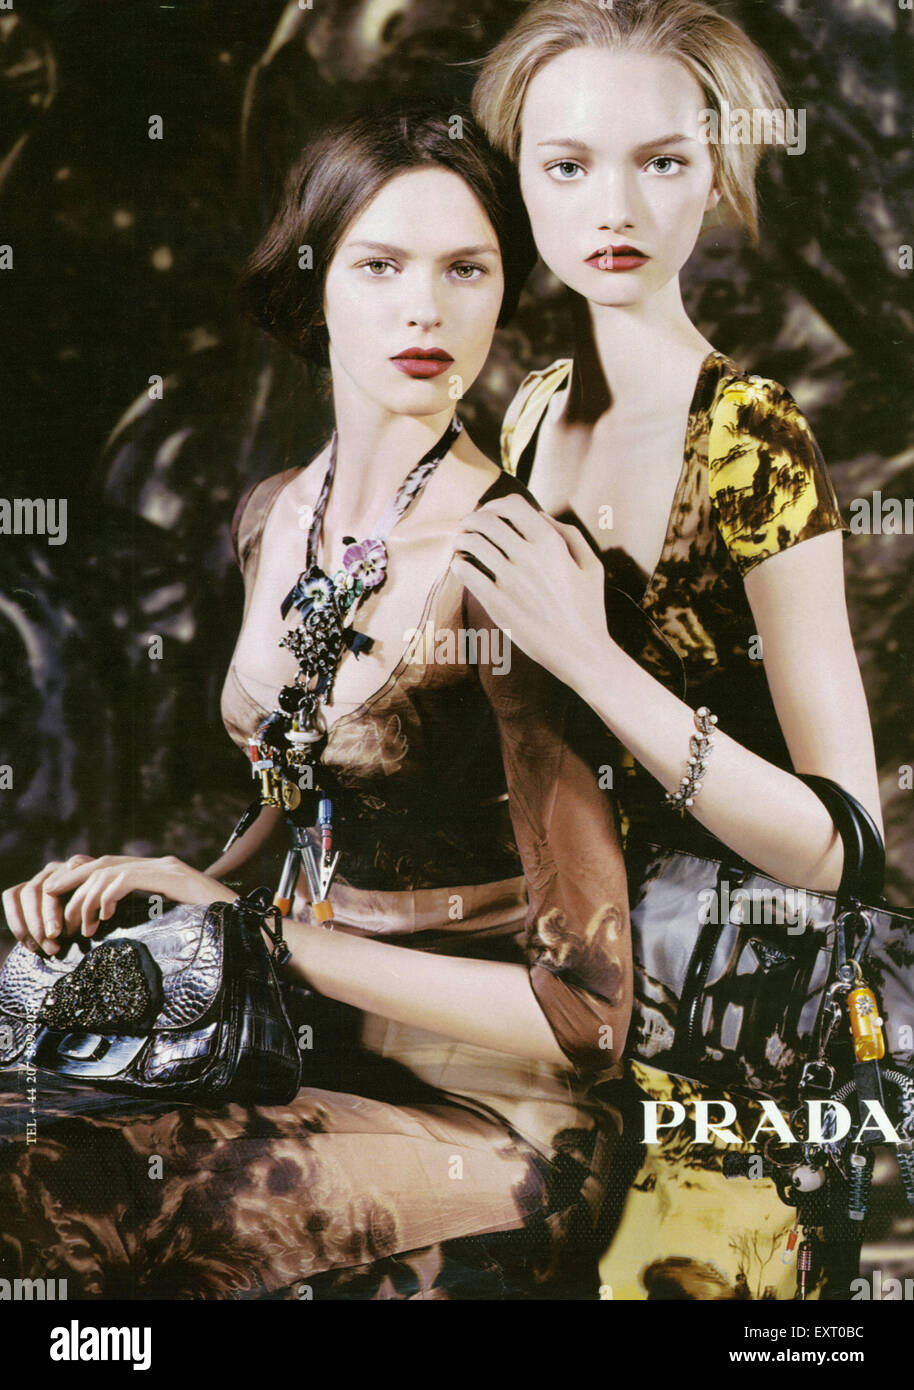 2000s UK Prada Magazine Advert Stock Photo - Alamy